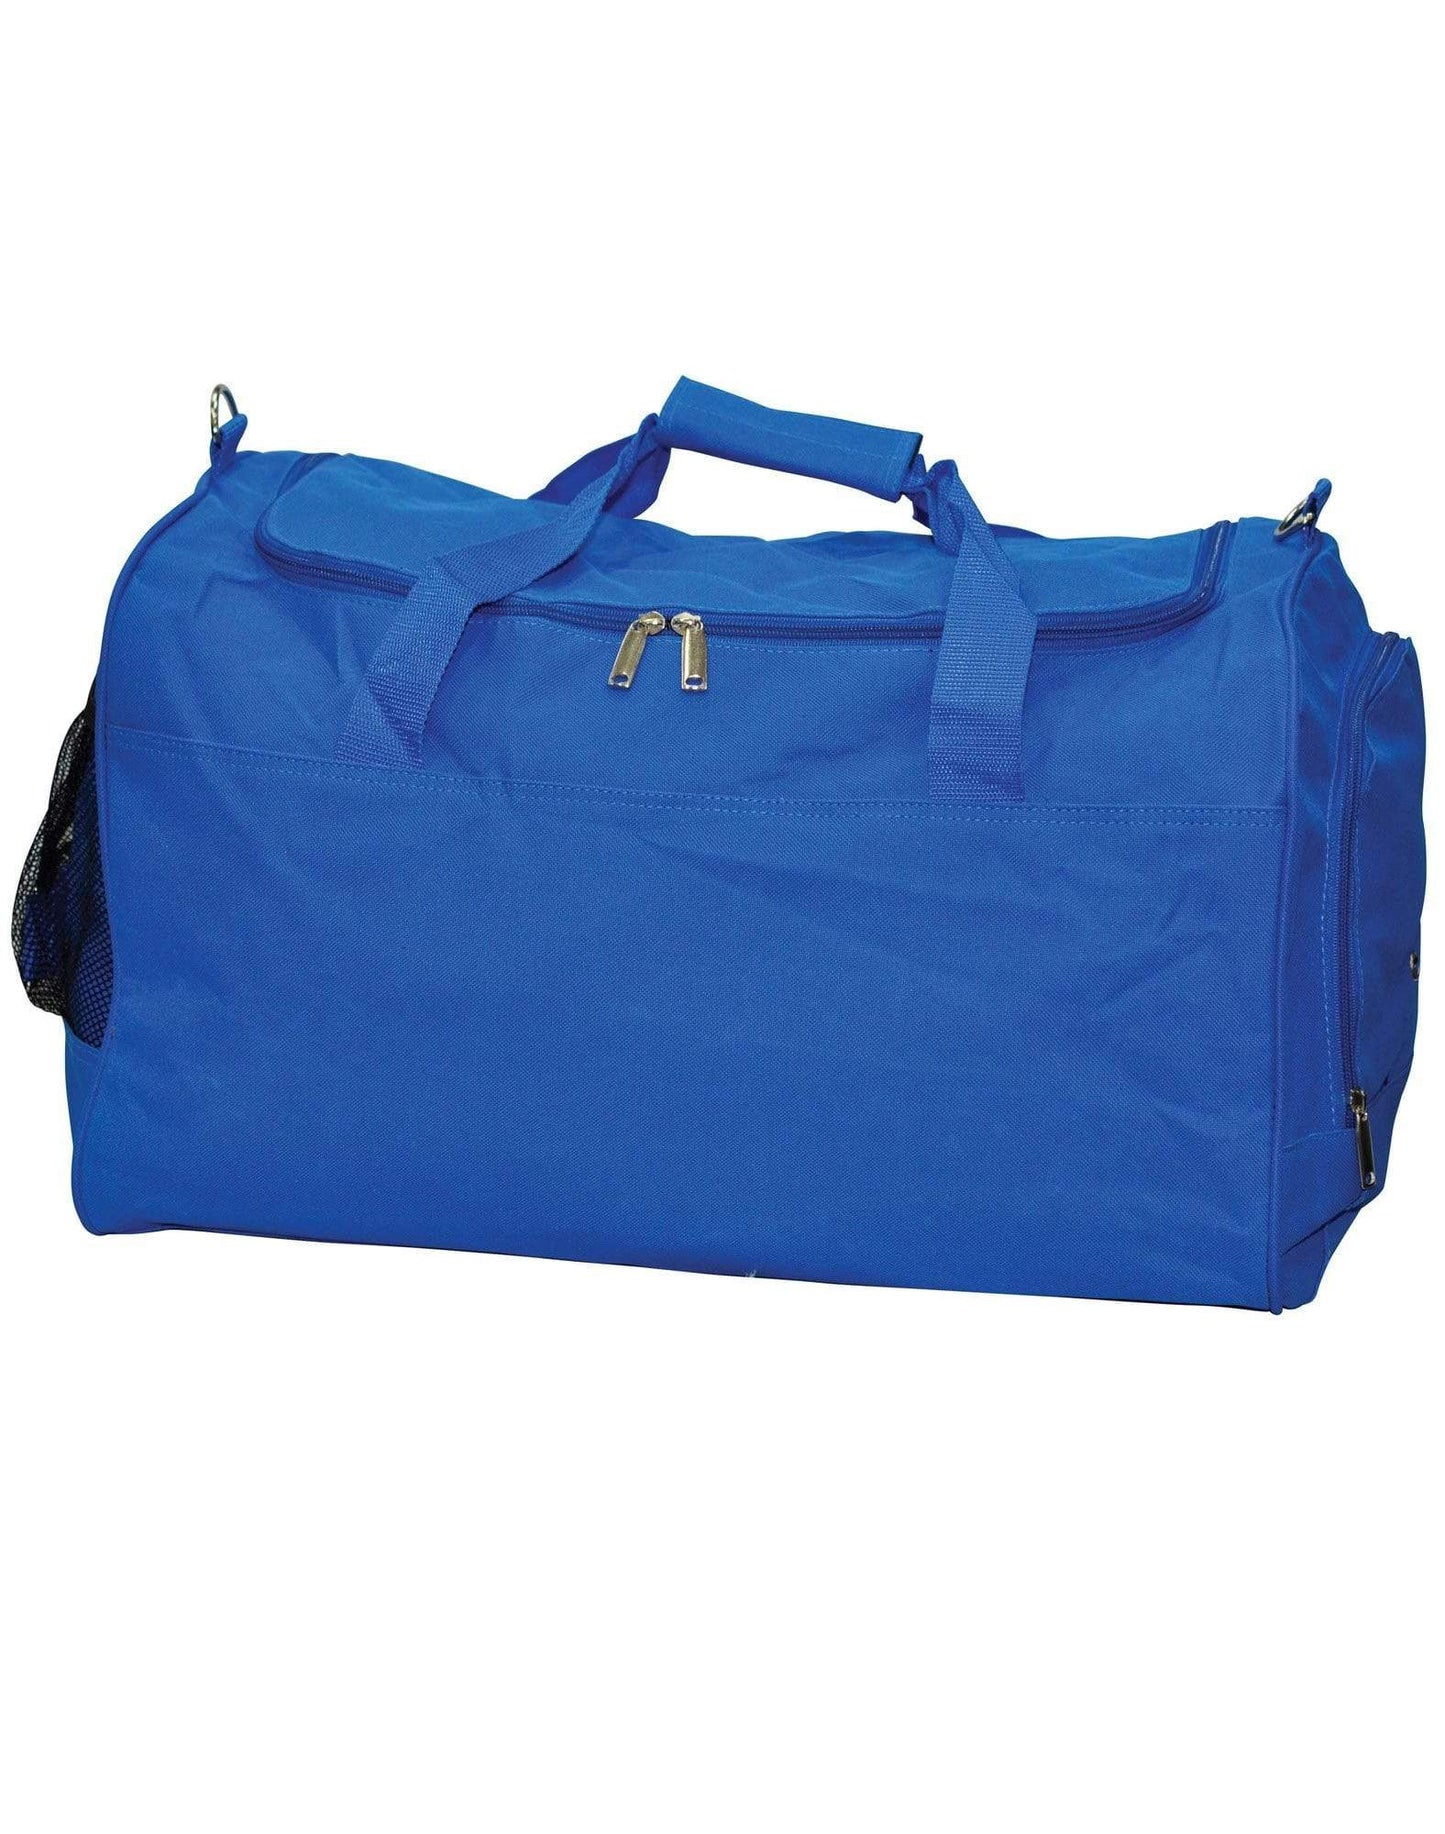 Basic Sports Bag B2000 Active Wear Winning Spirit Royal "(w)51cm x (h)35cm x (d)38cm, 67.8 Litres Capacity" 